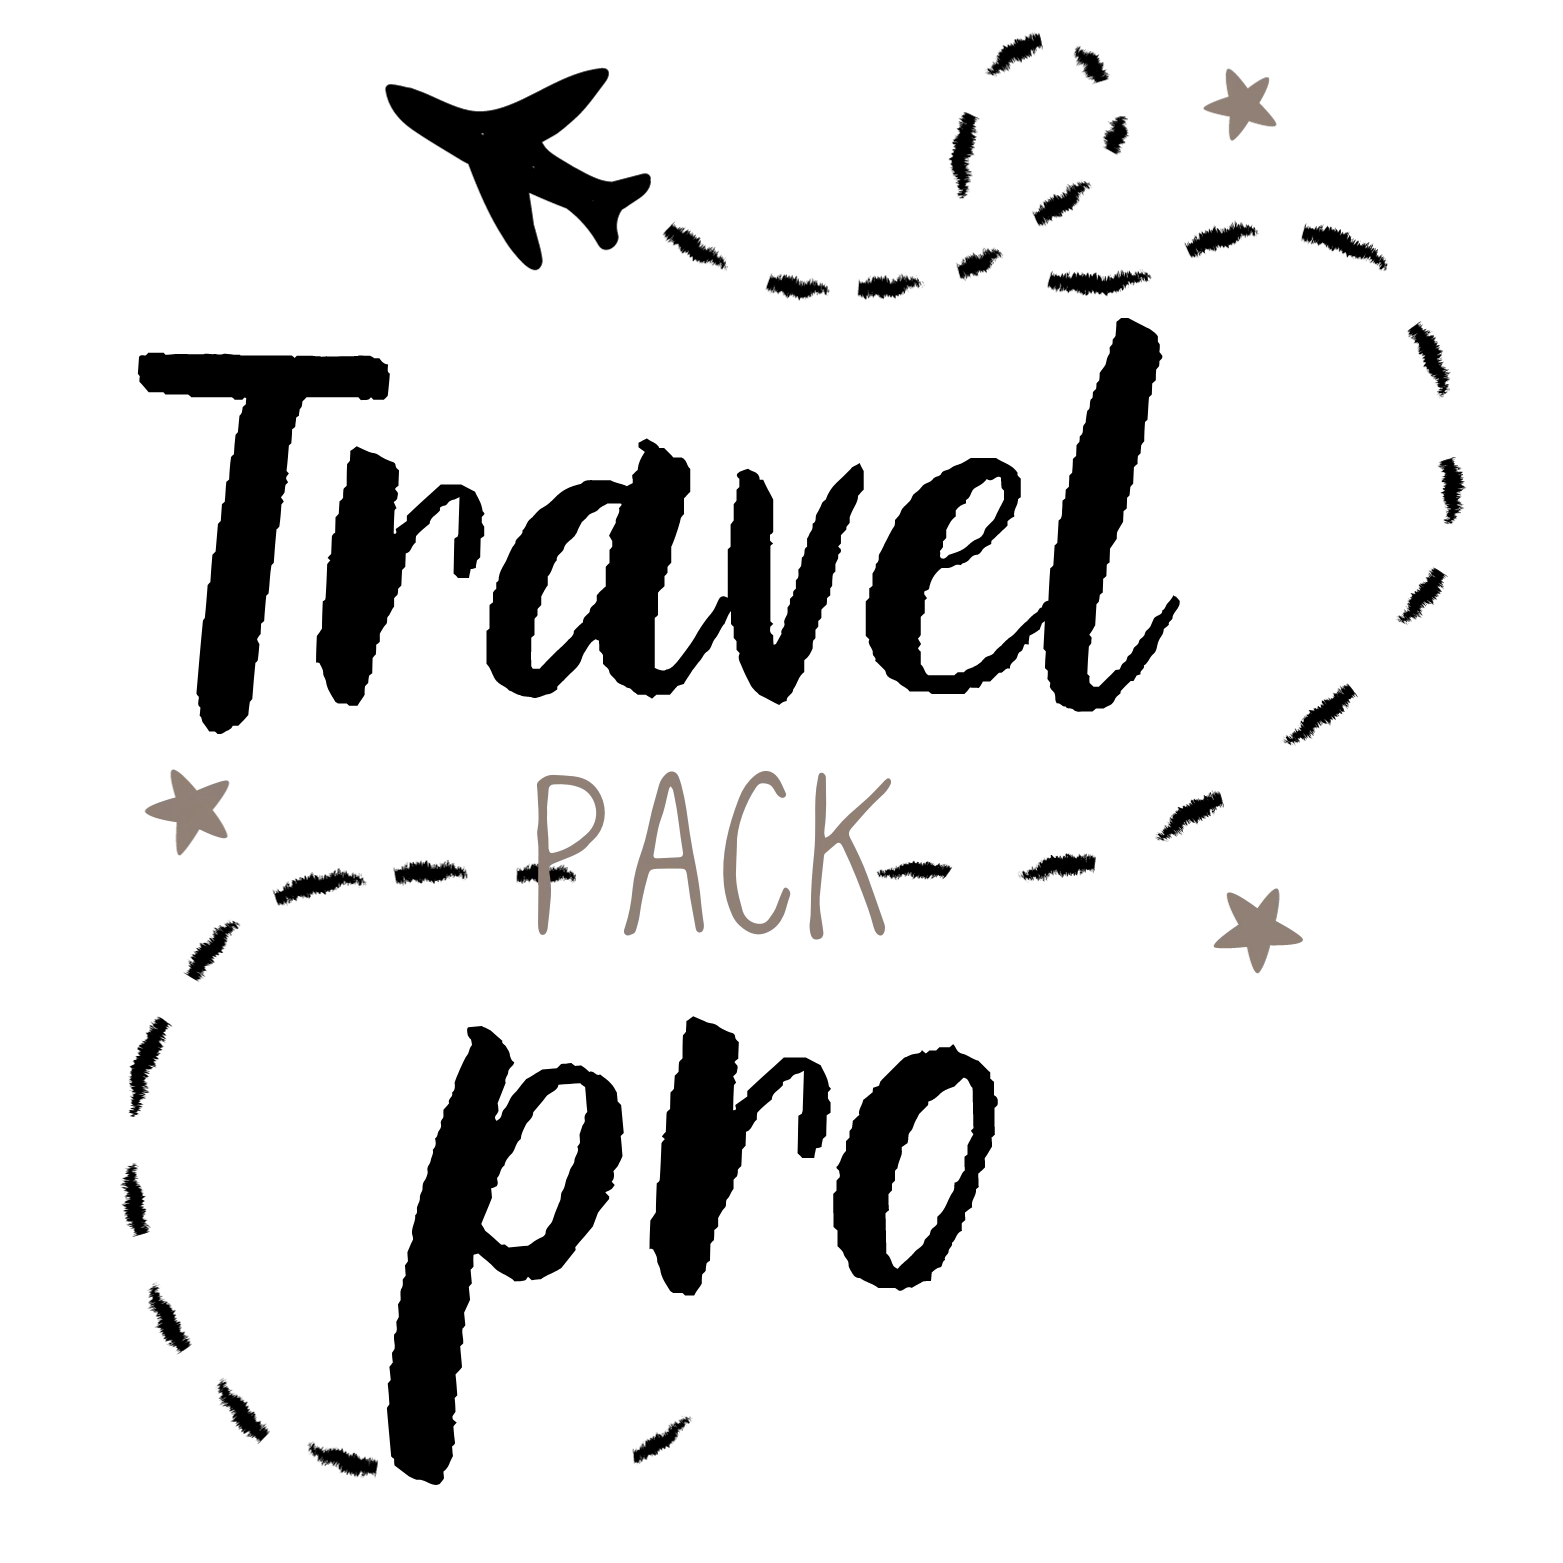 Travel Pack Pro